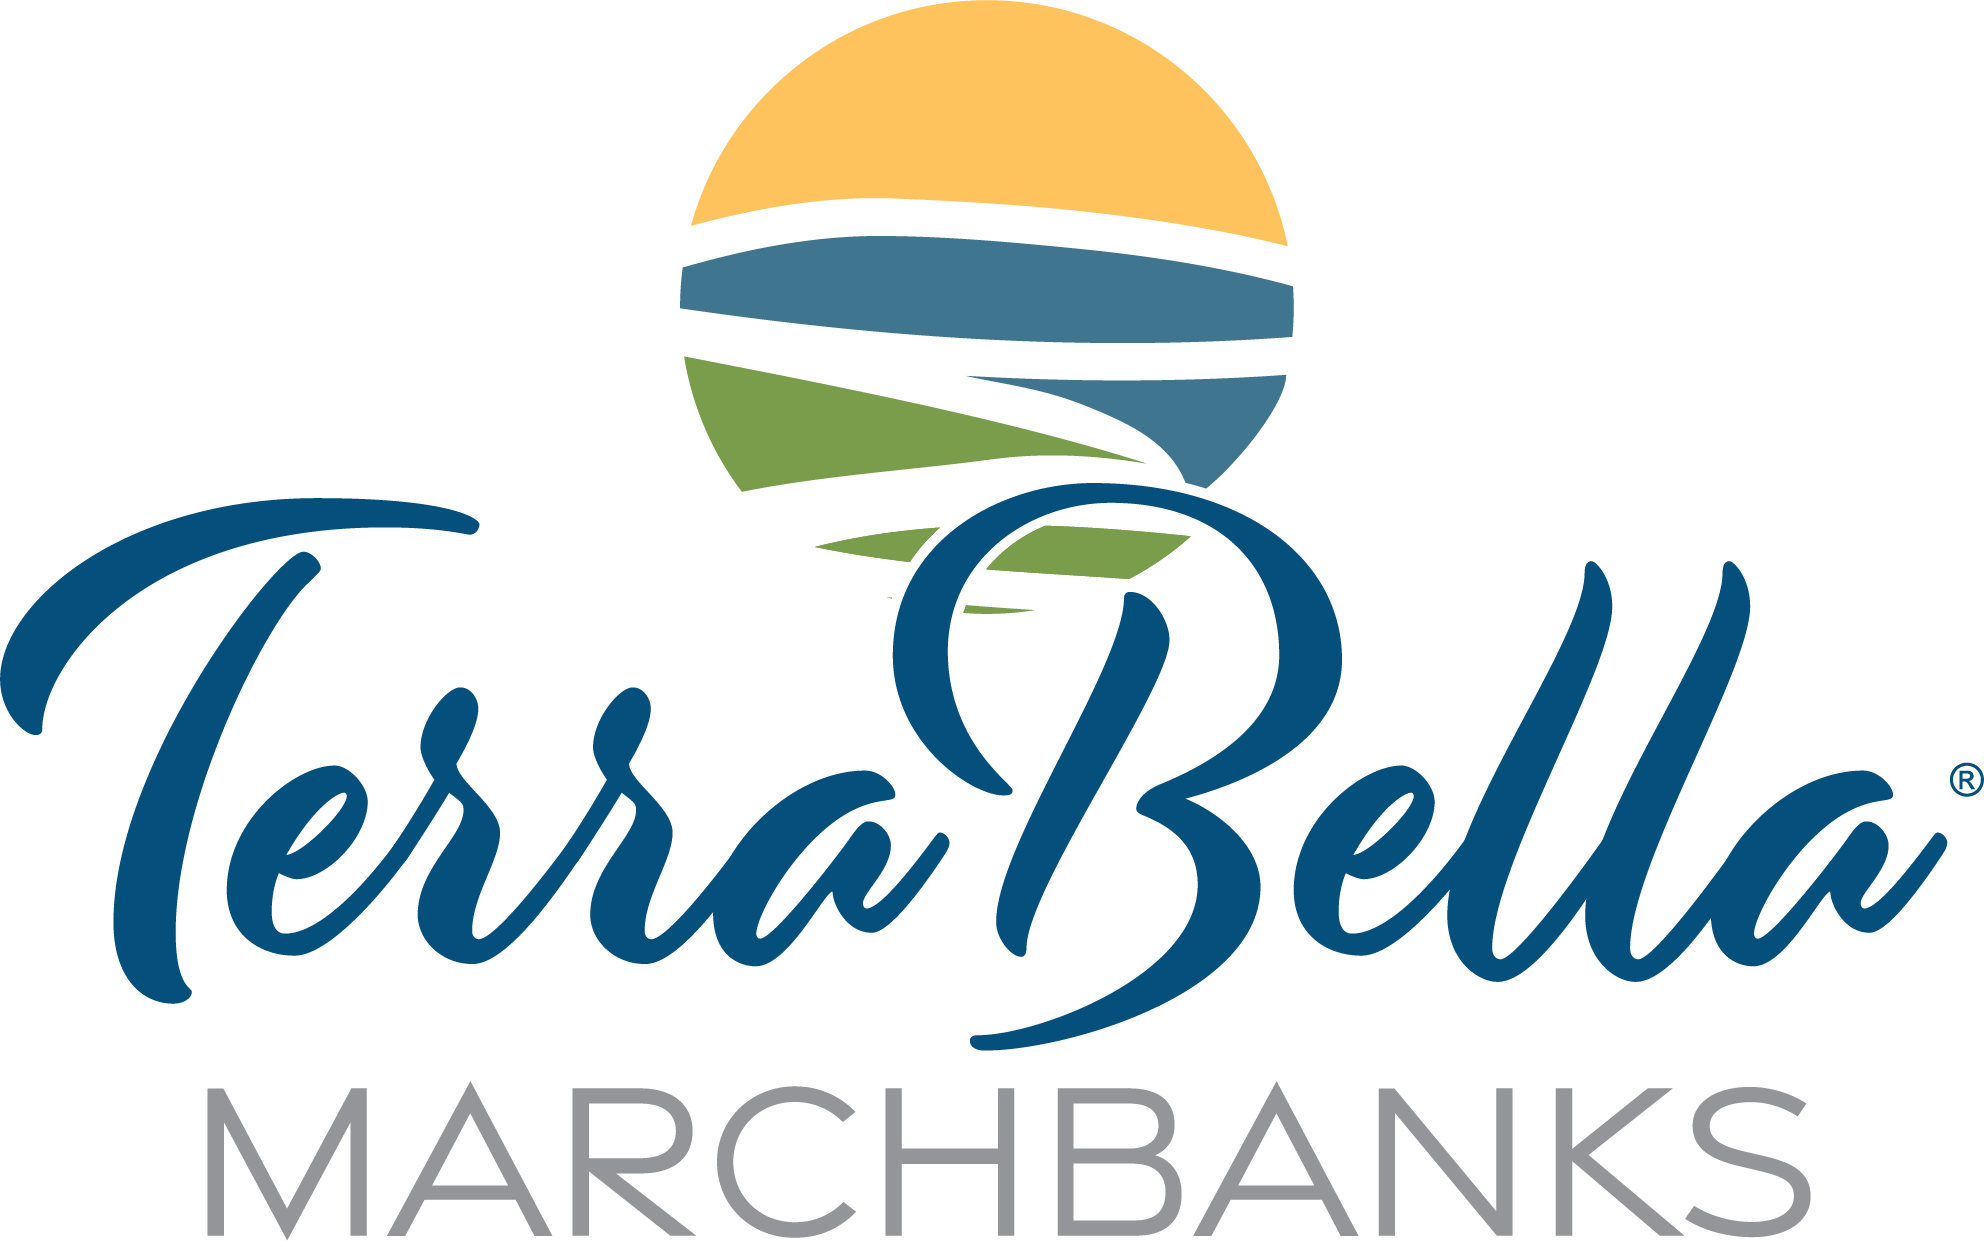 TerraBella Marchbanks